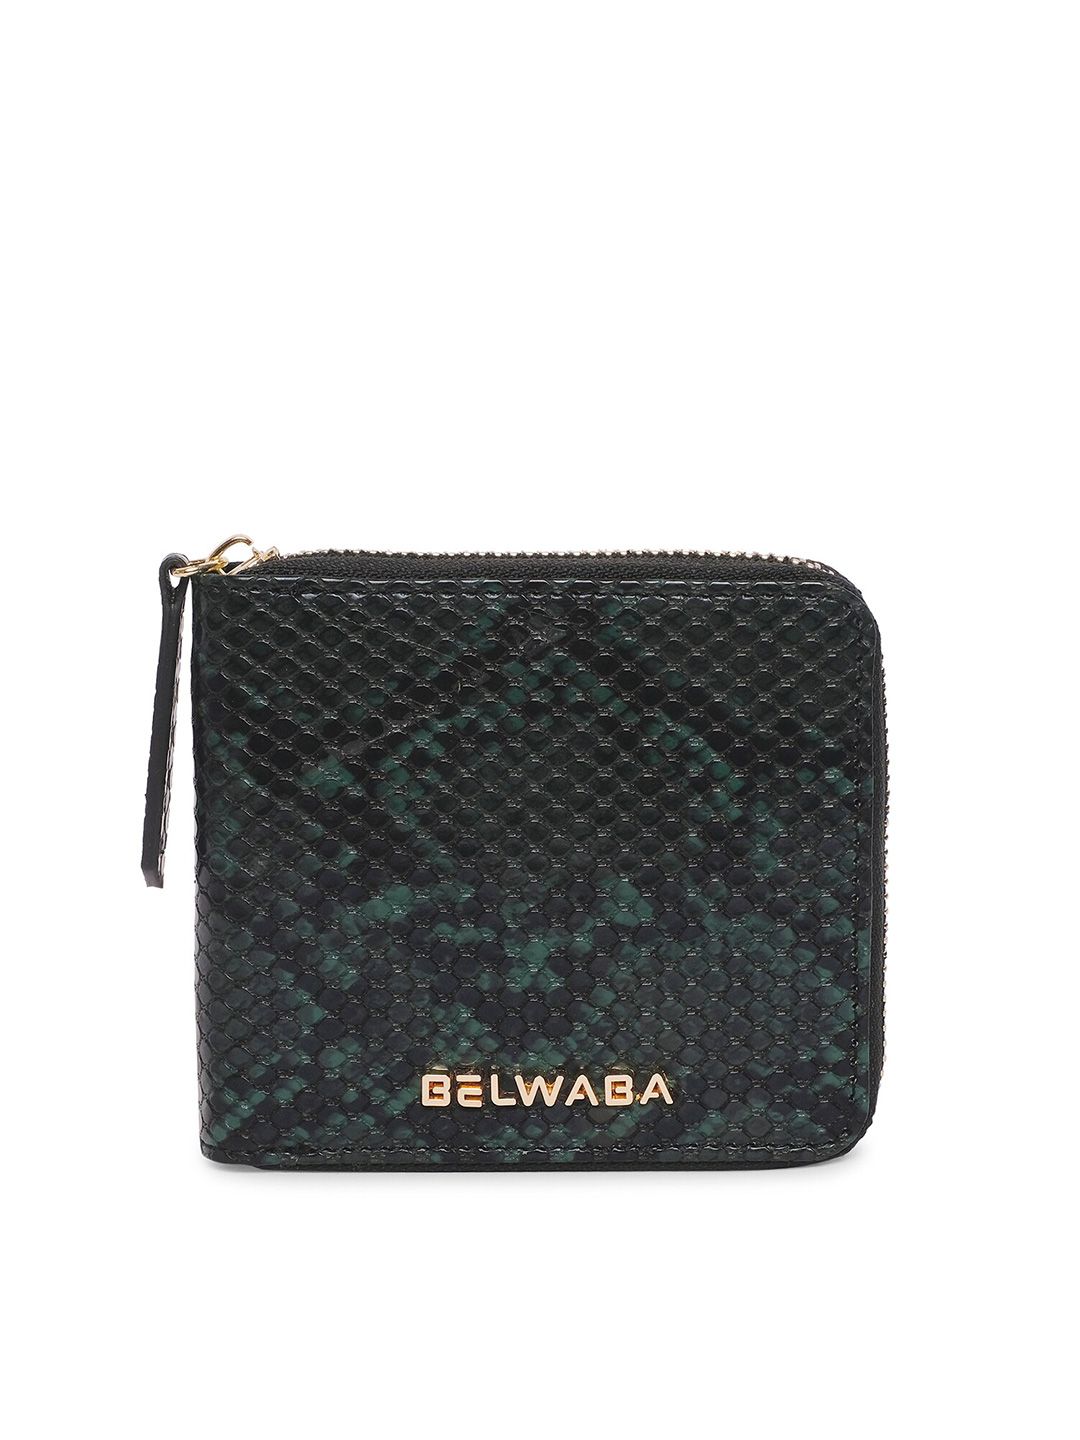 Belwaba Women Green & Black Animal Textured PU Zip Around Wallet Price in India